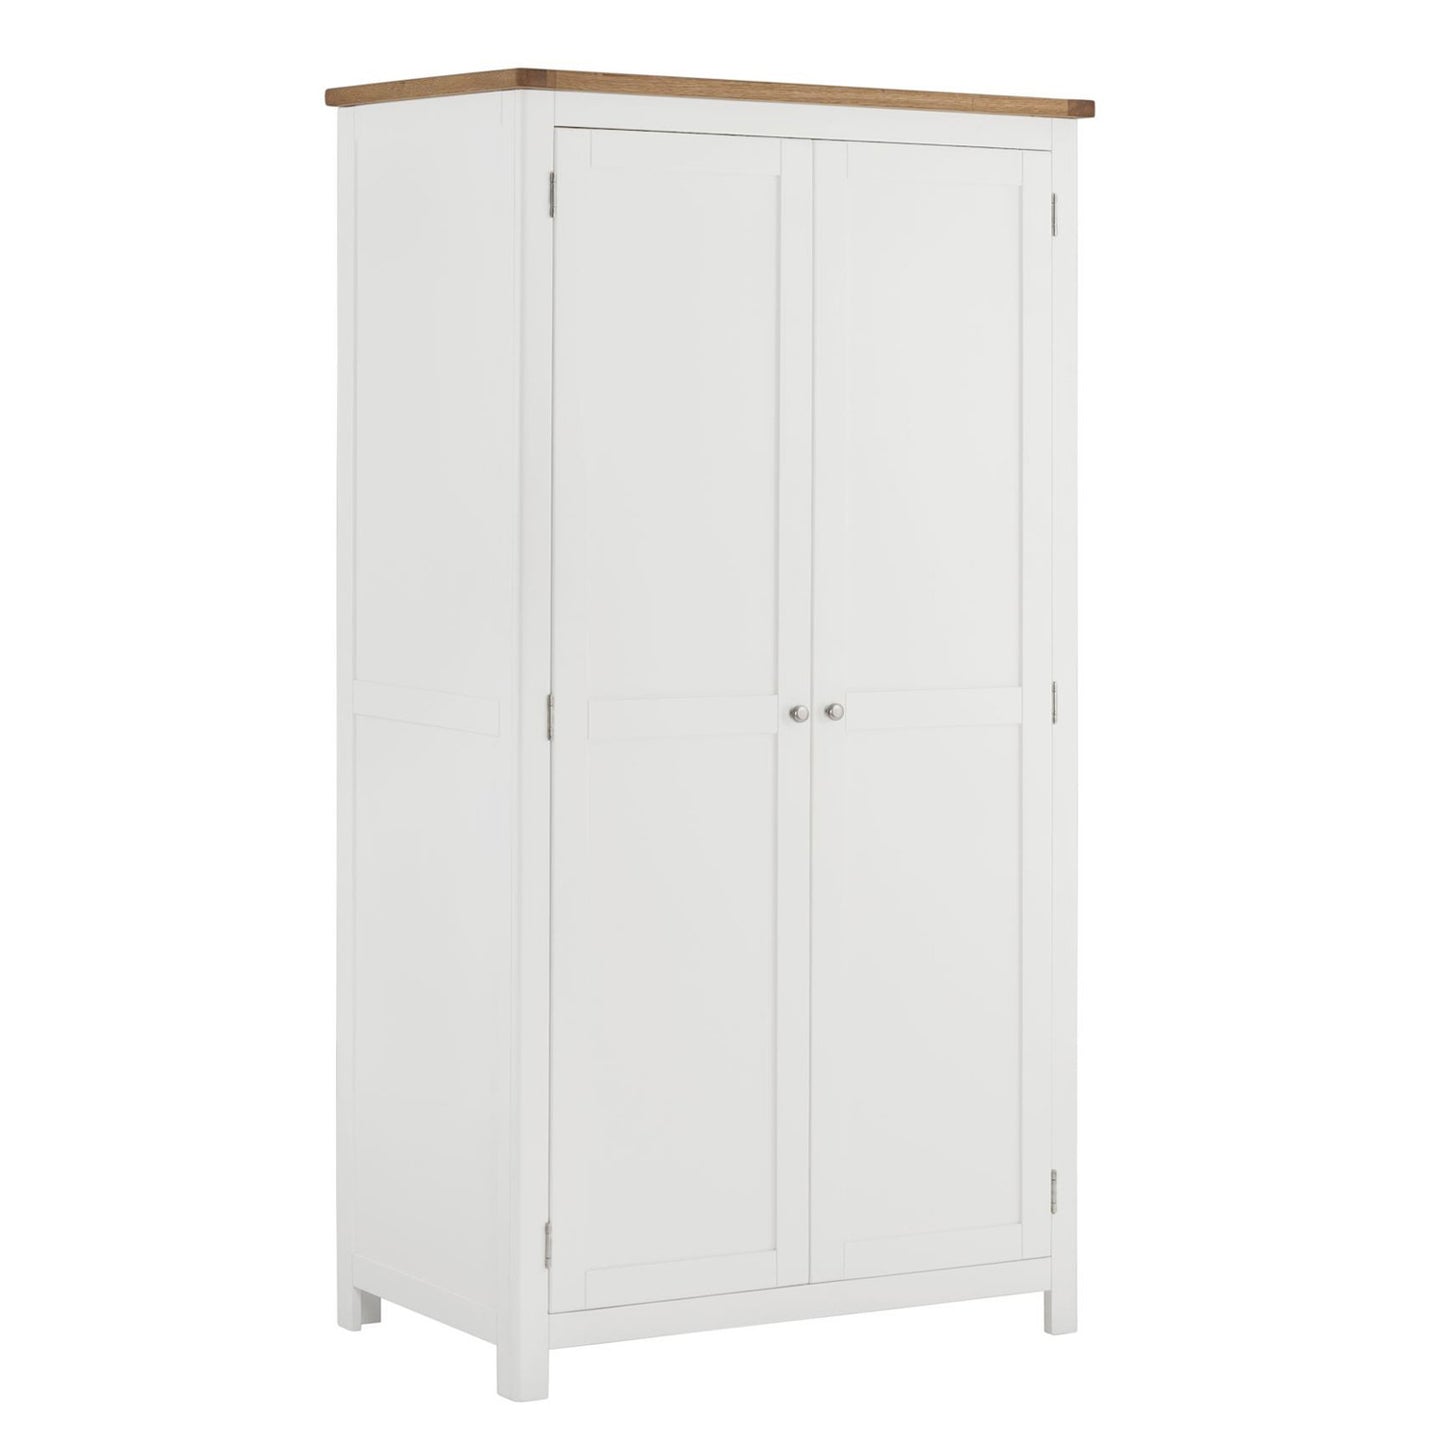 Todenham White Painted & Oak Wardrobe - Double 2 Door Full Hanging